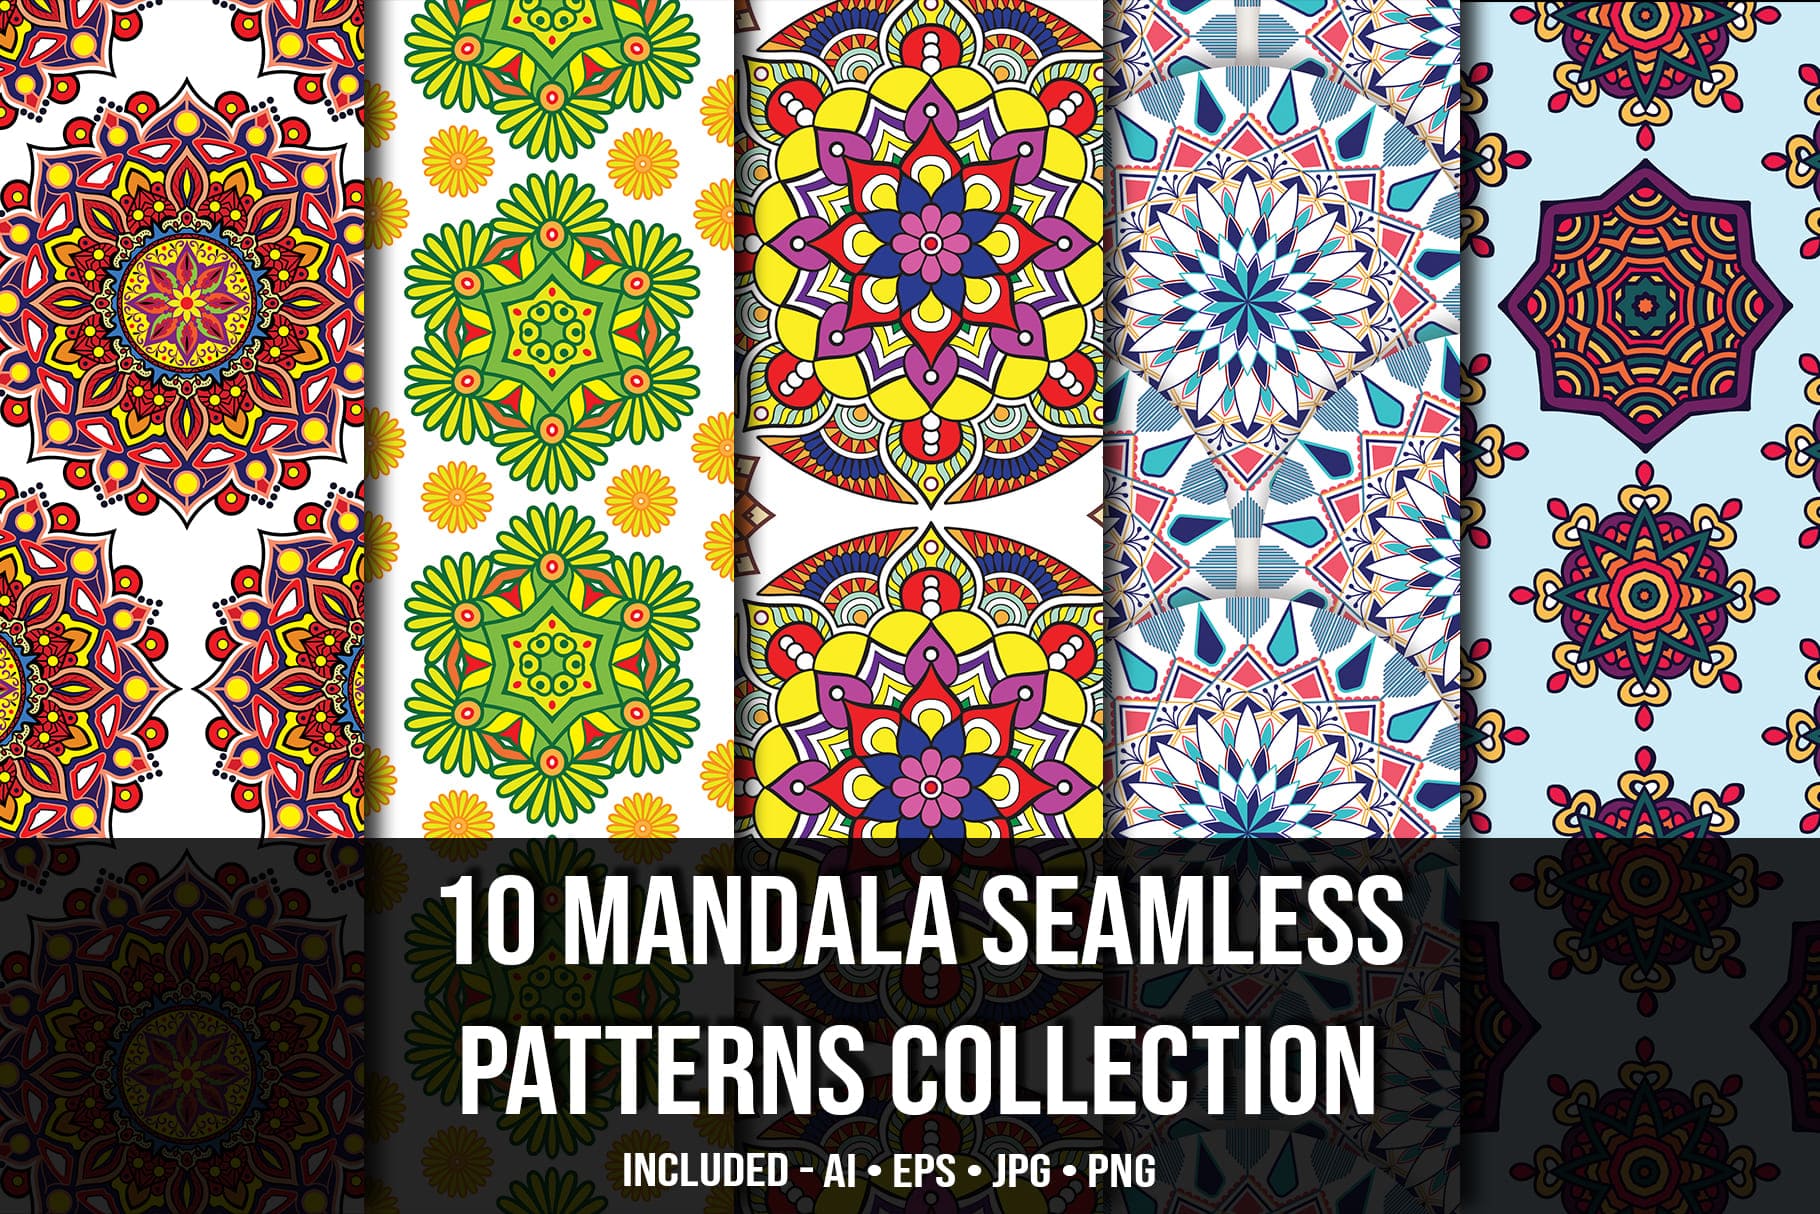 Main image.Mandala Seamless Patterns Collection.